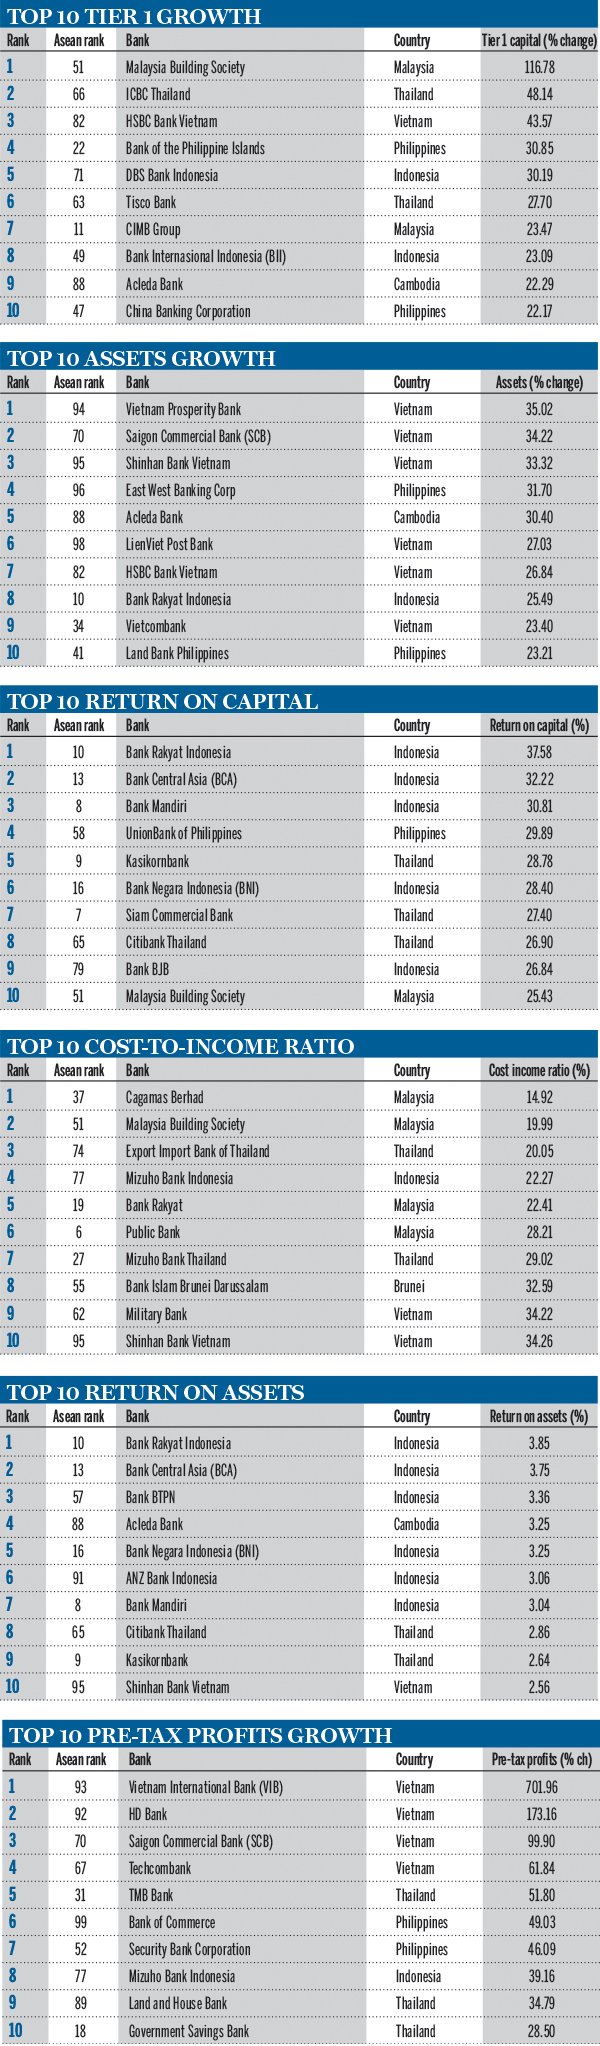 Top banks in Asean ranking